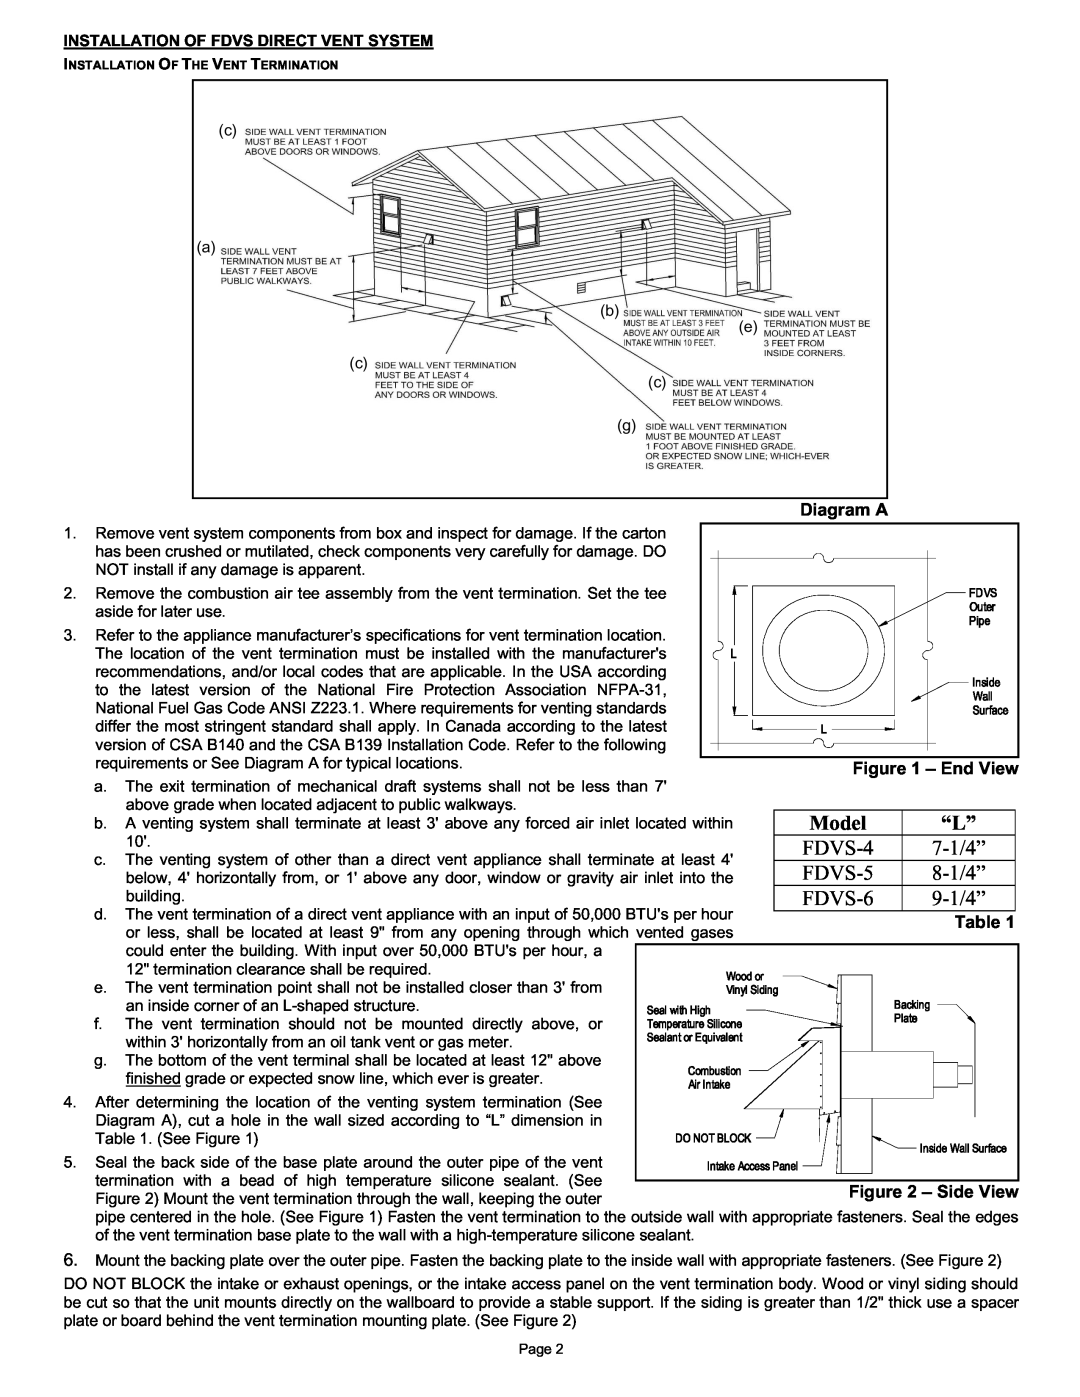 Field Controls installation instructions FDVS-4, 7-1/4”, FDVS-5, 8-1/4”, FDVS-6, 9-1/4”, Diagram A, End View, Model 